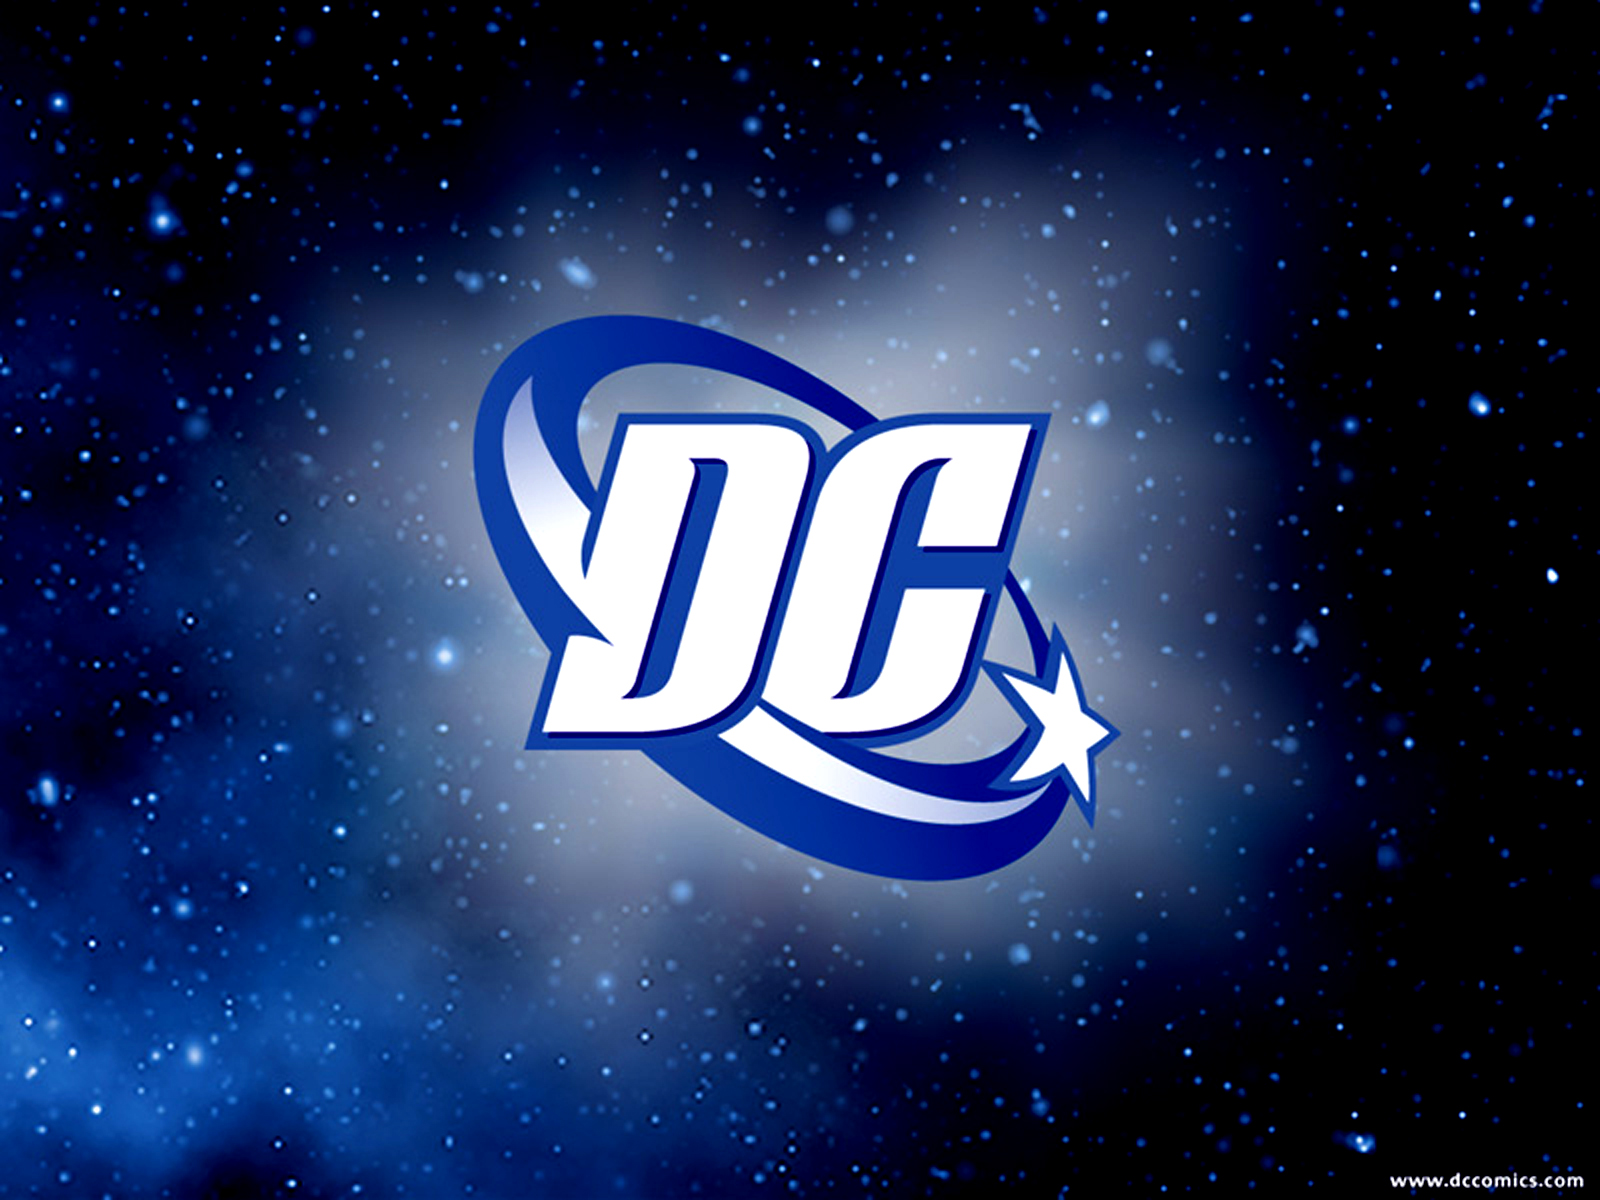 DC Comics Super Heroes HD Logo Wallpaper wwwVvallpaperNet 1jpg 1600x1200